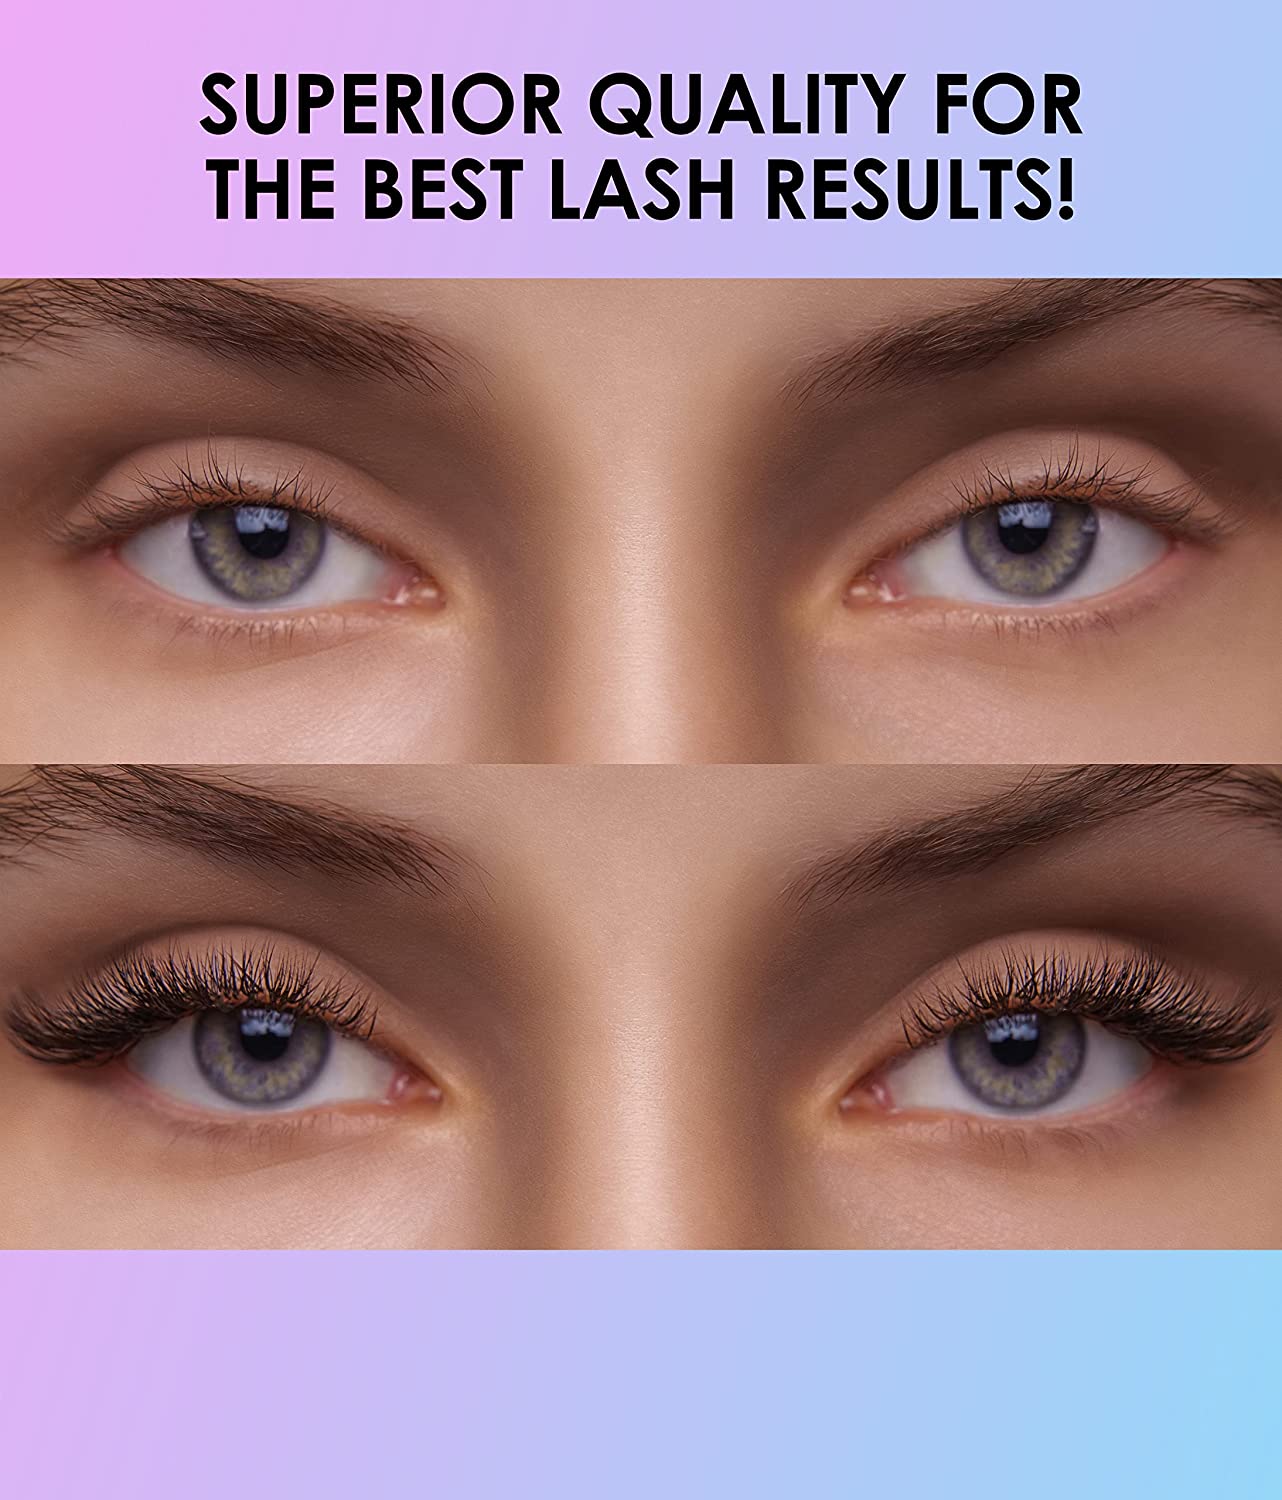 Stacy Lash Bundle: Eyelash Extension Glue - Crystal Clear 5ml & Volume 5ml photo 15